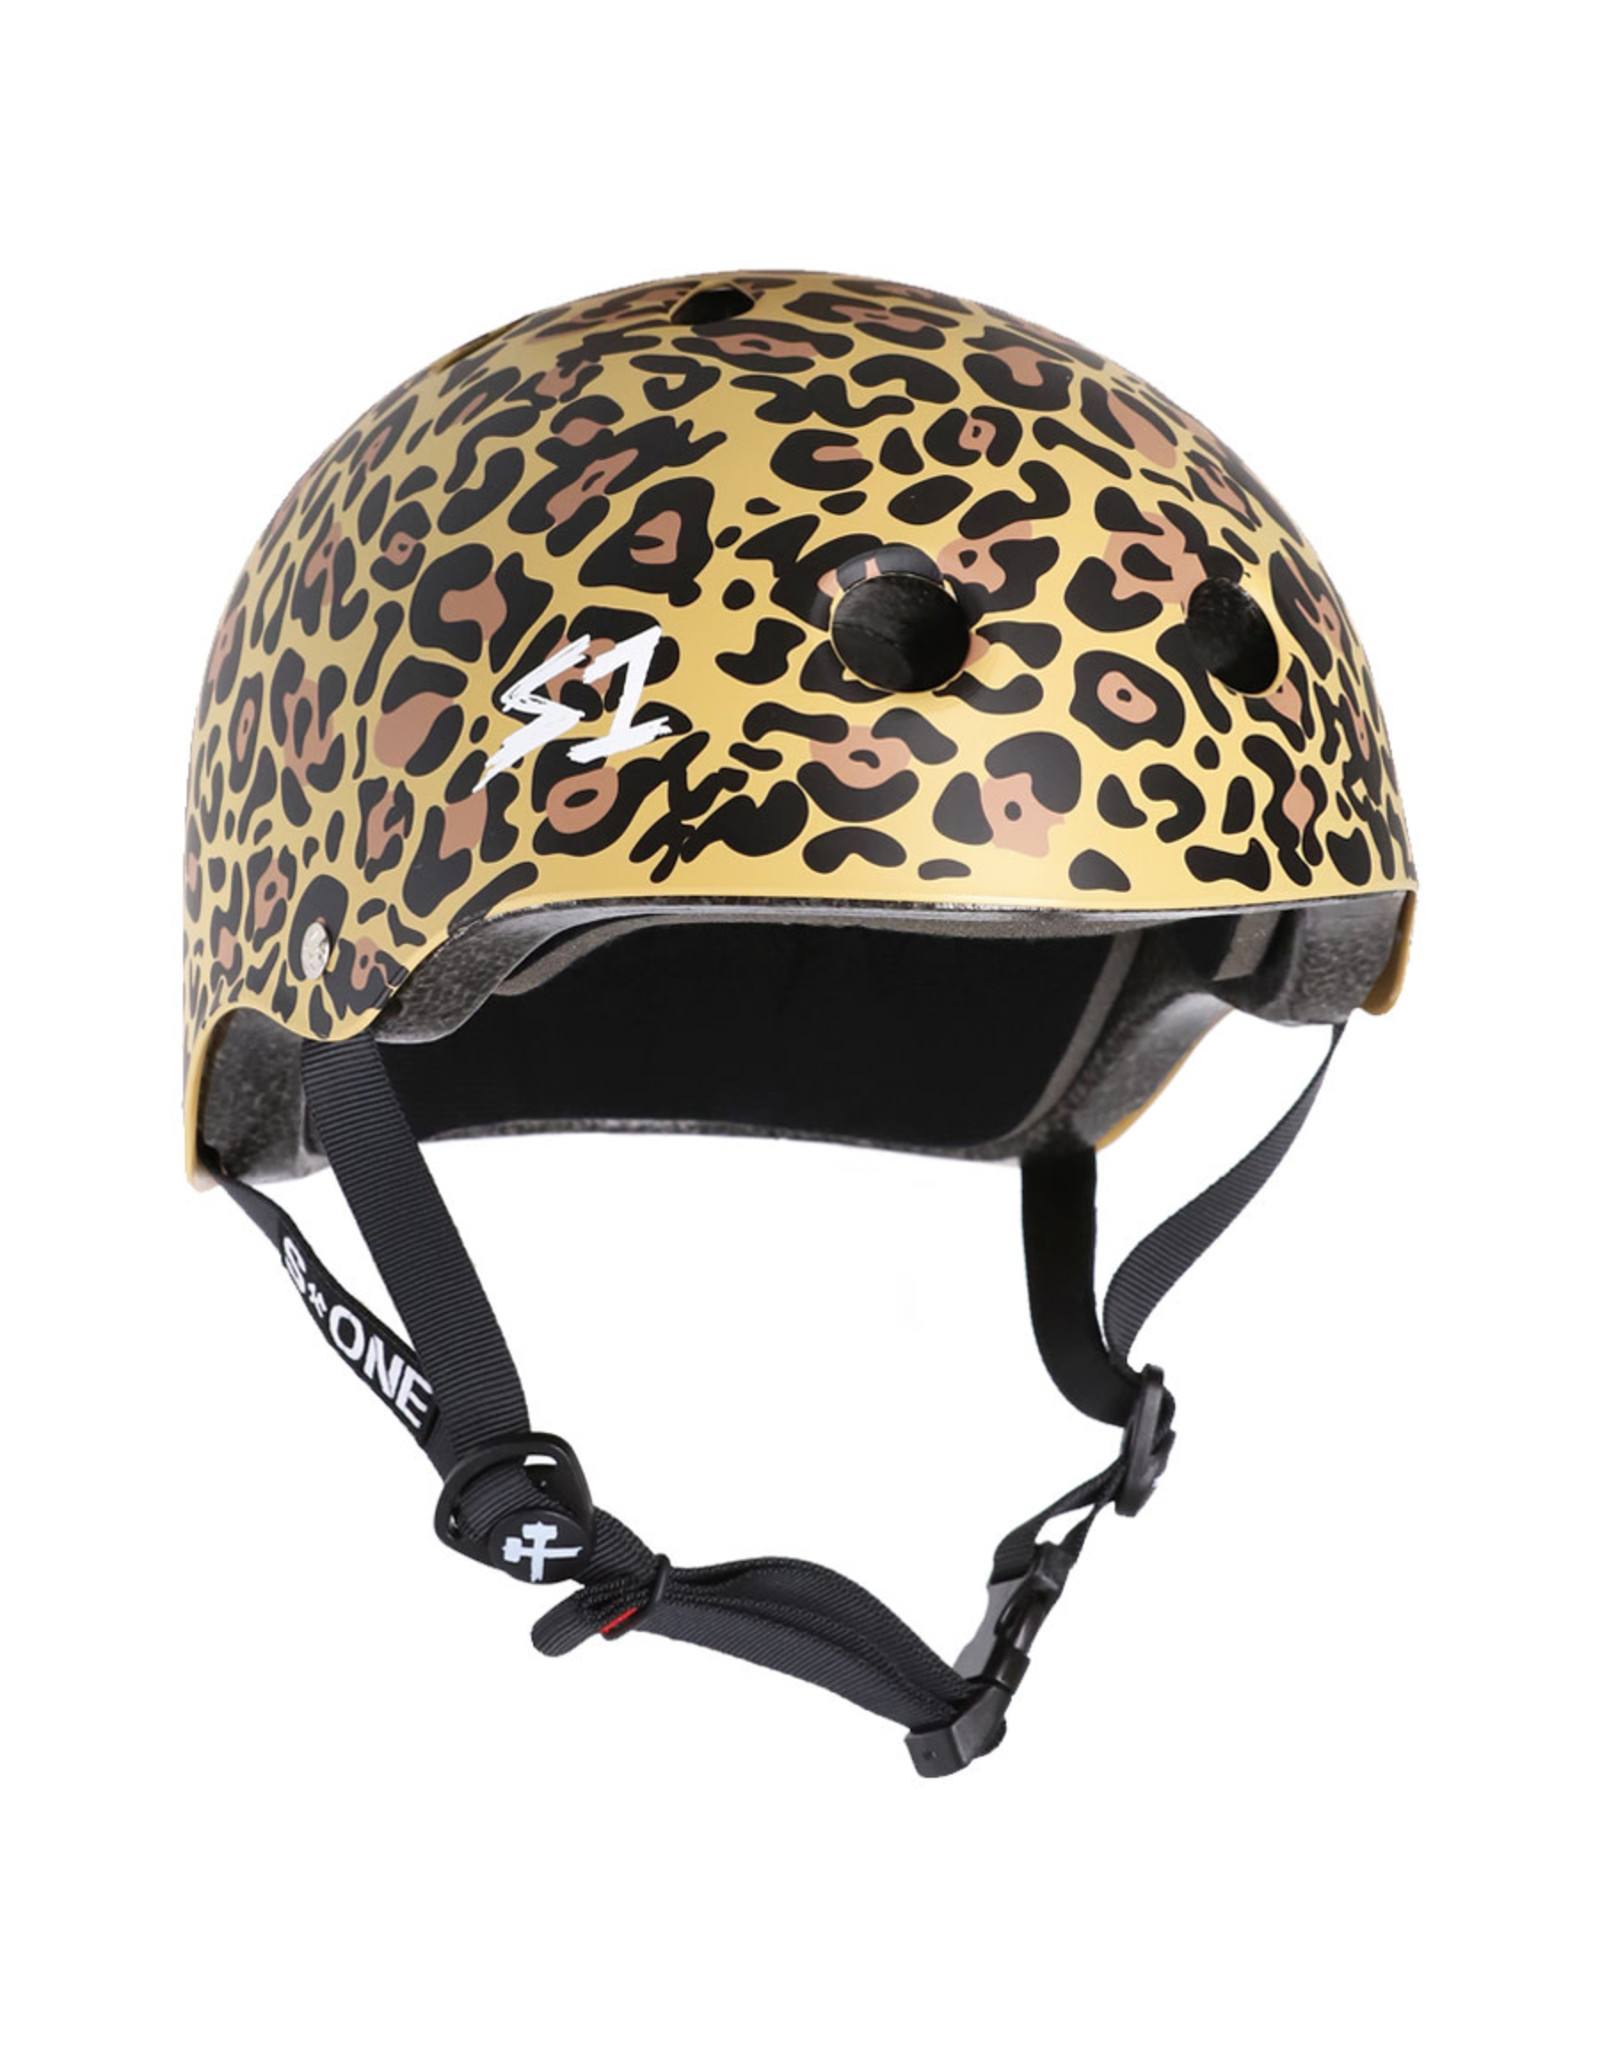 S-One S-One Helmet The Adult Lifer (Tan Leopard Print/Black Straps)